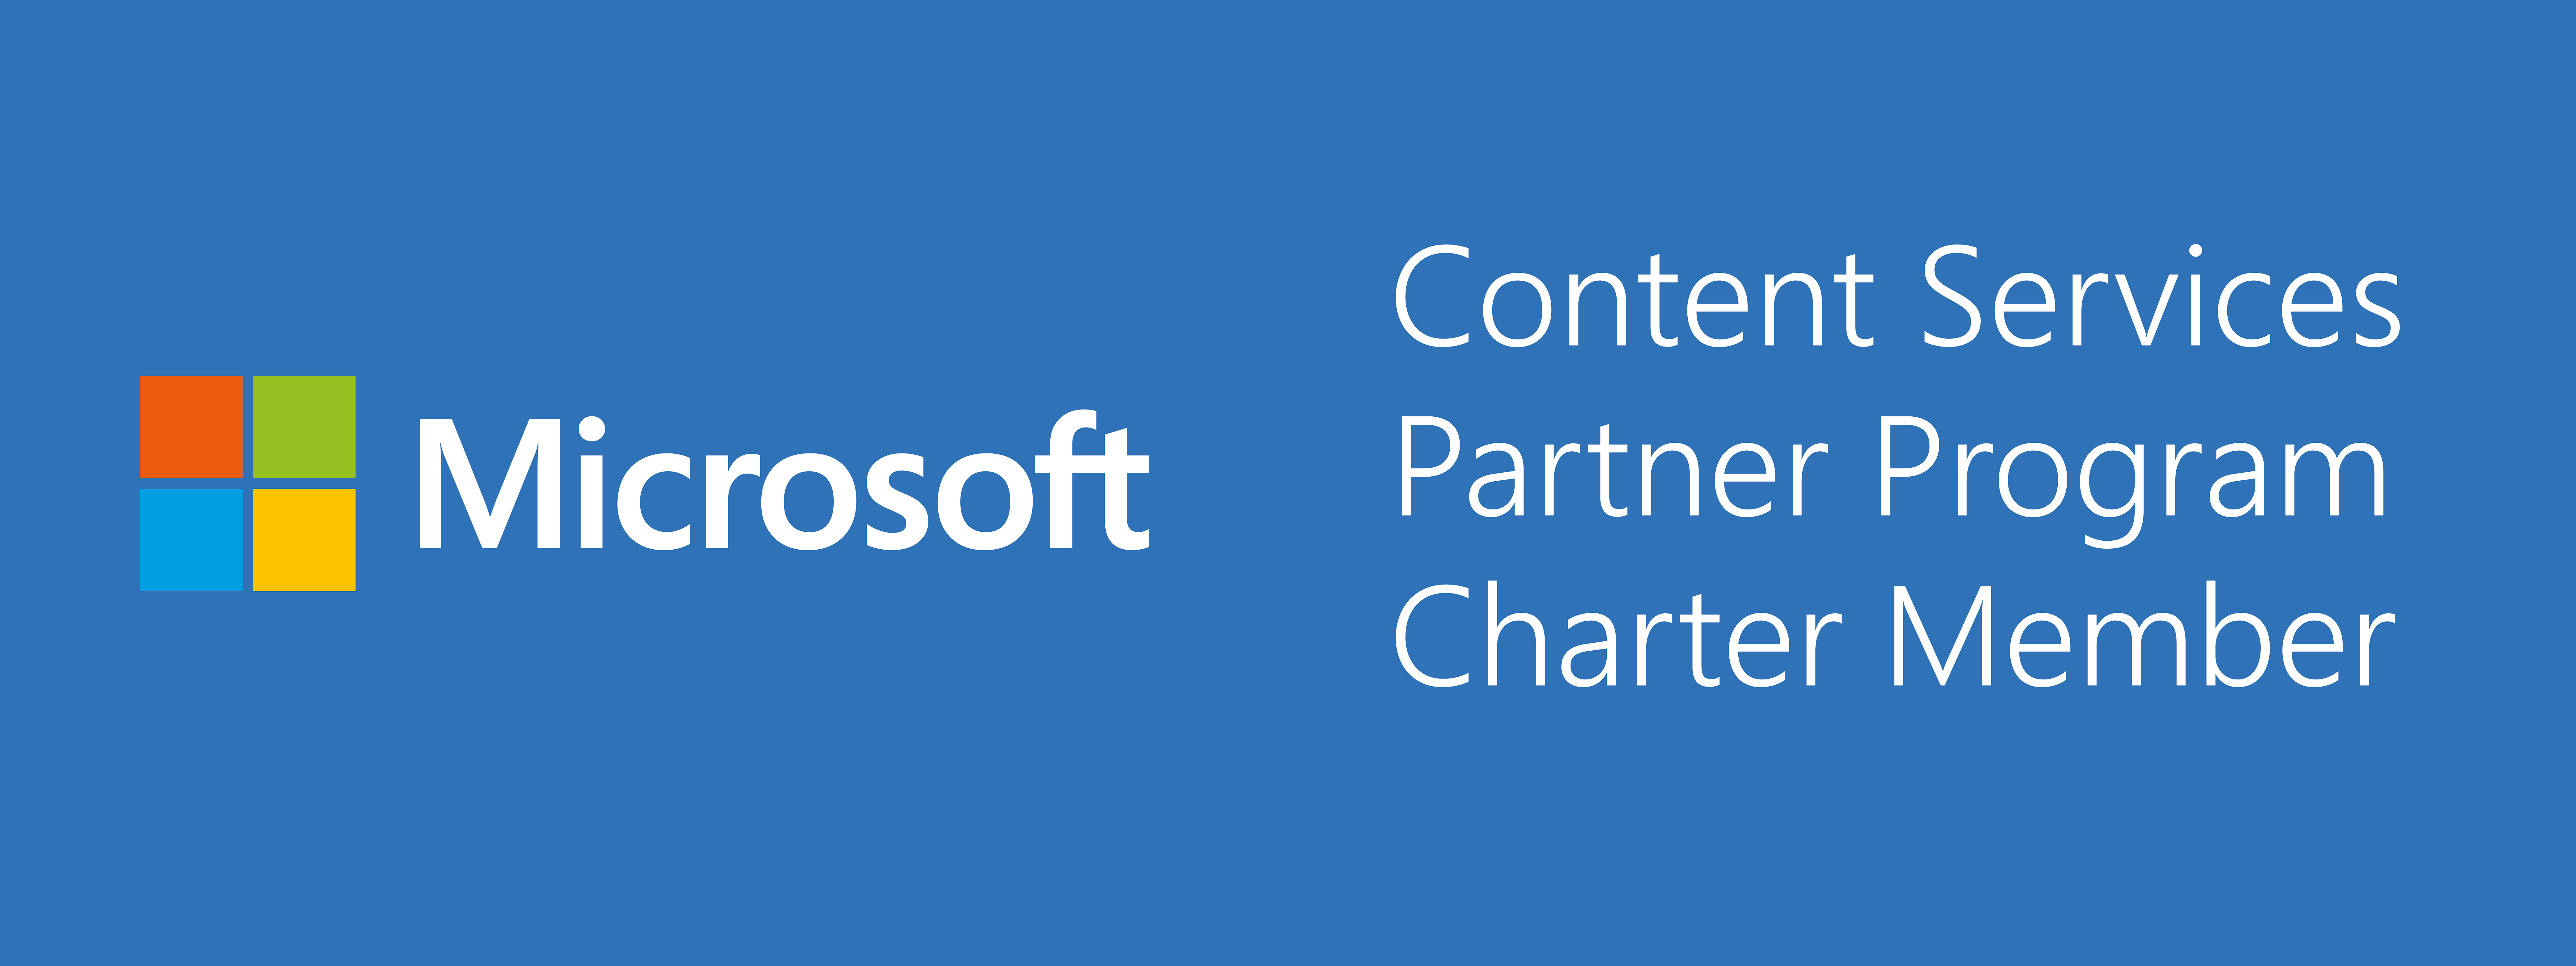 Microsoft Charter Member